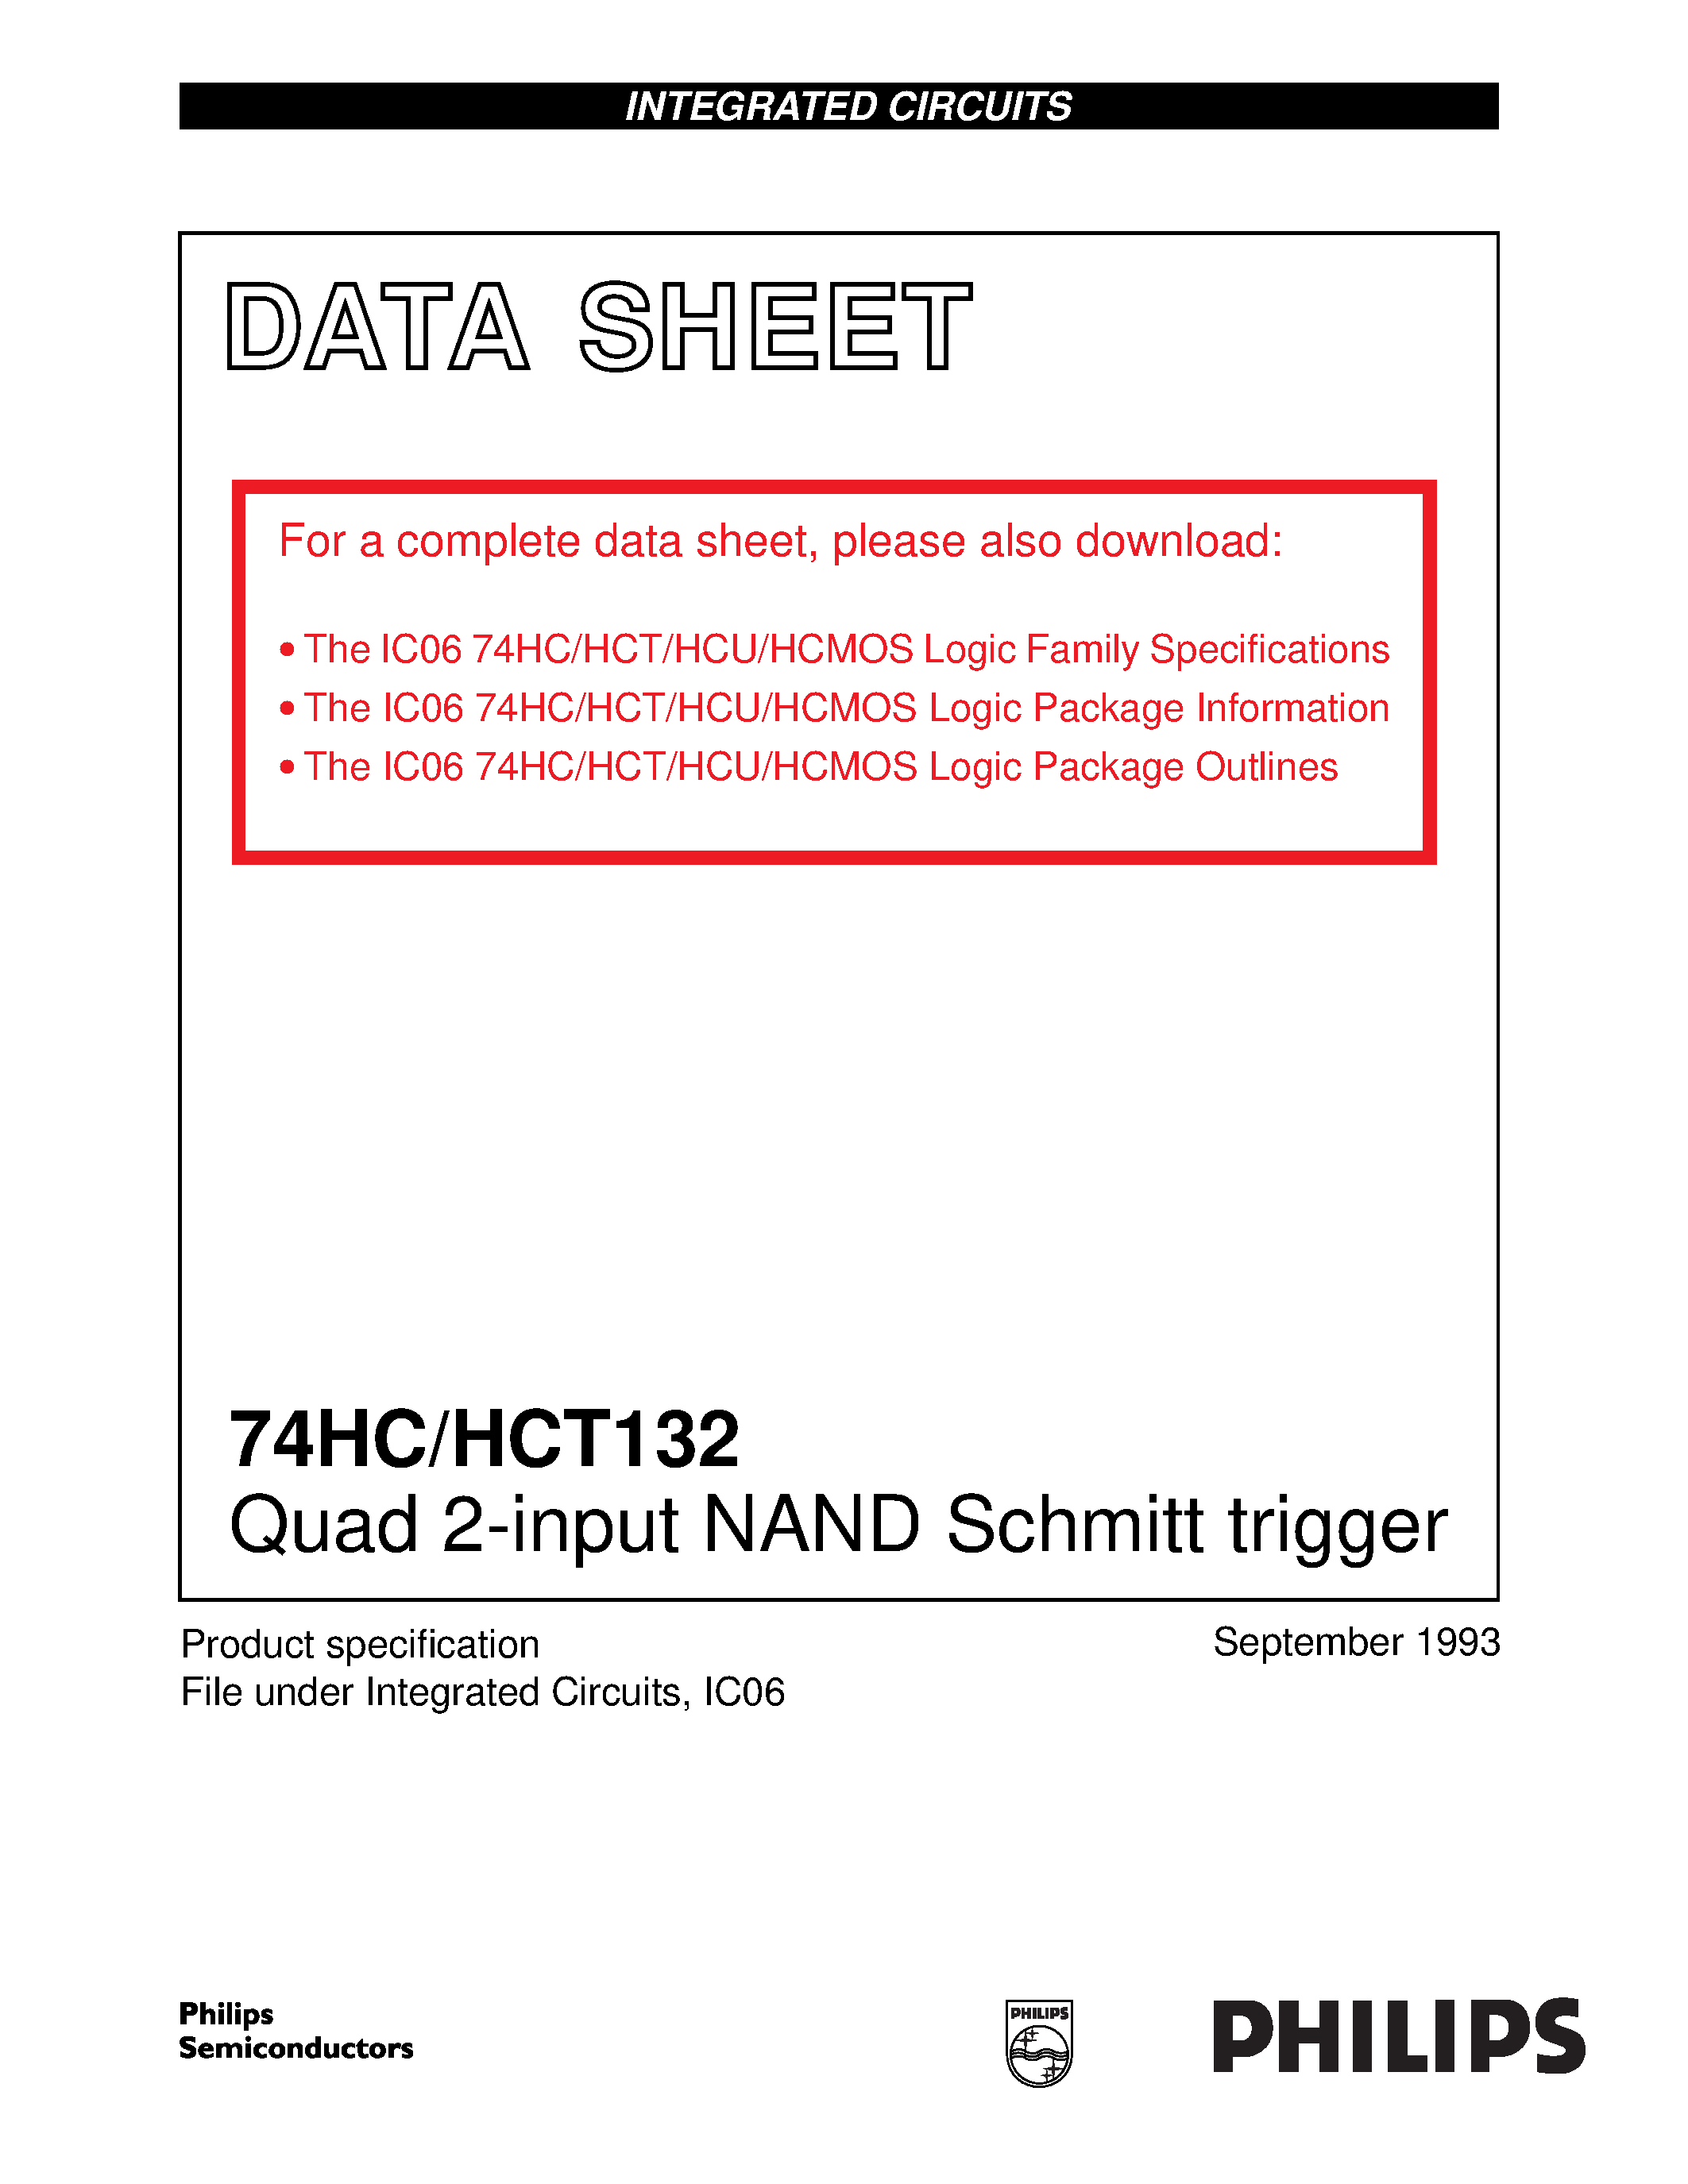 Даташит 74HCT132 - Quad 2-input NAND Schmitt trigger страница 1